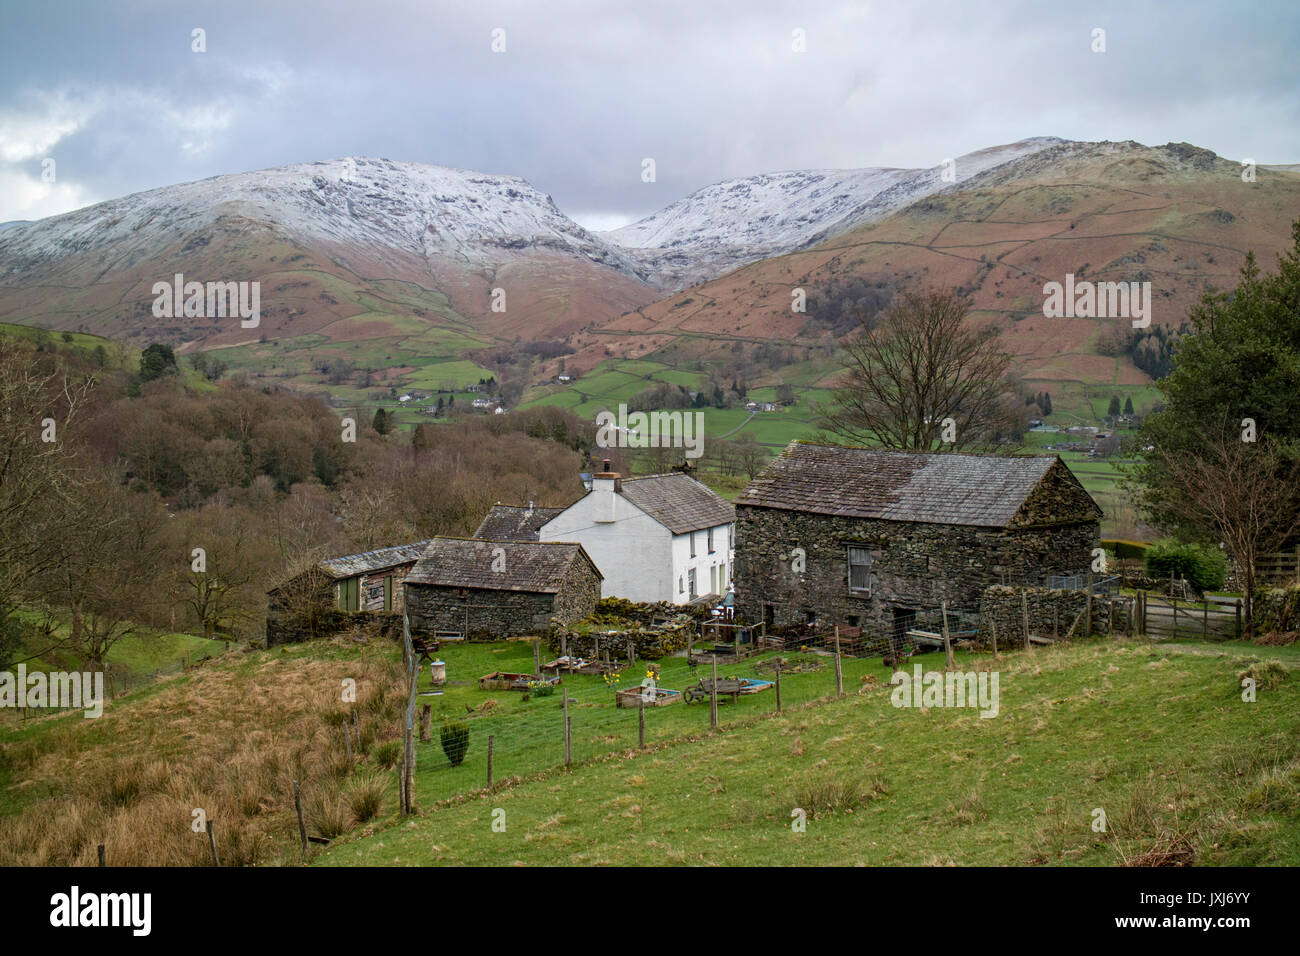 Traditional lakeland farm near Ambleside, Lake District National Park, Cumbria, England, UK Stock Photo